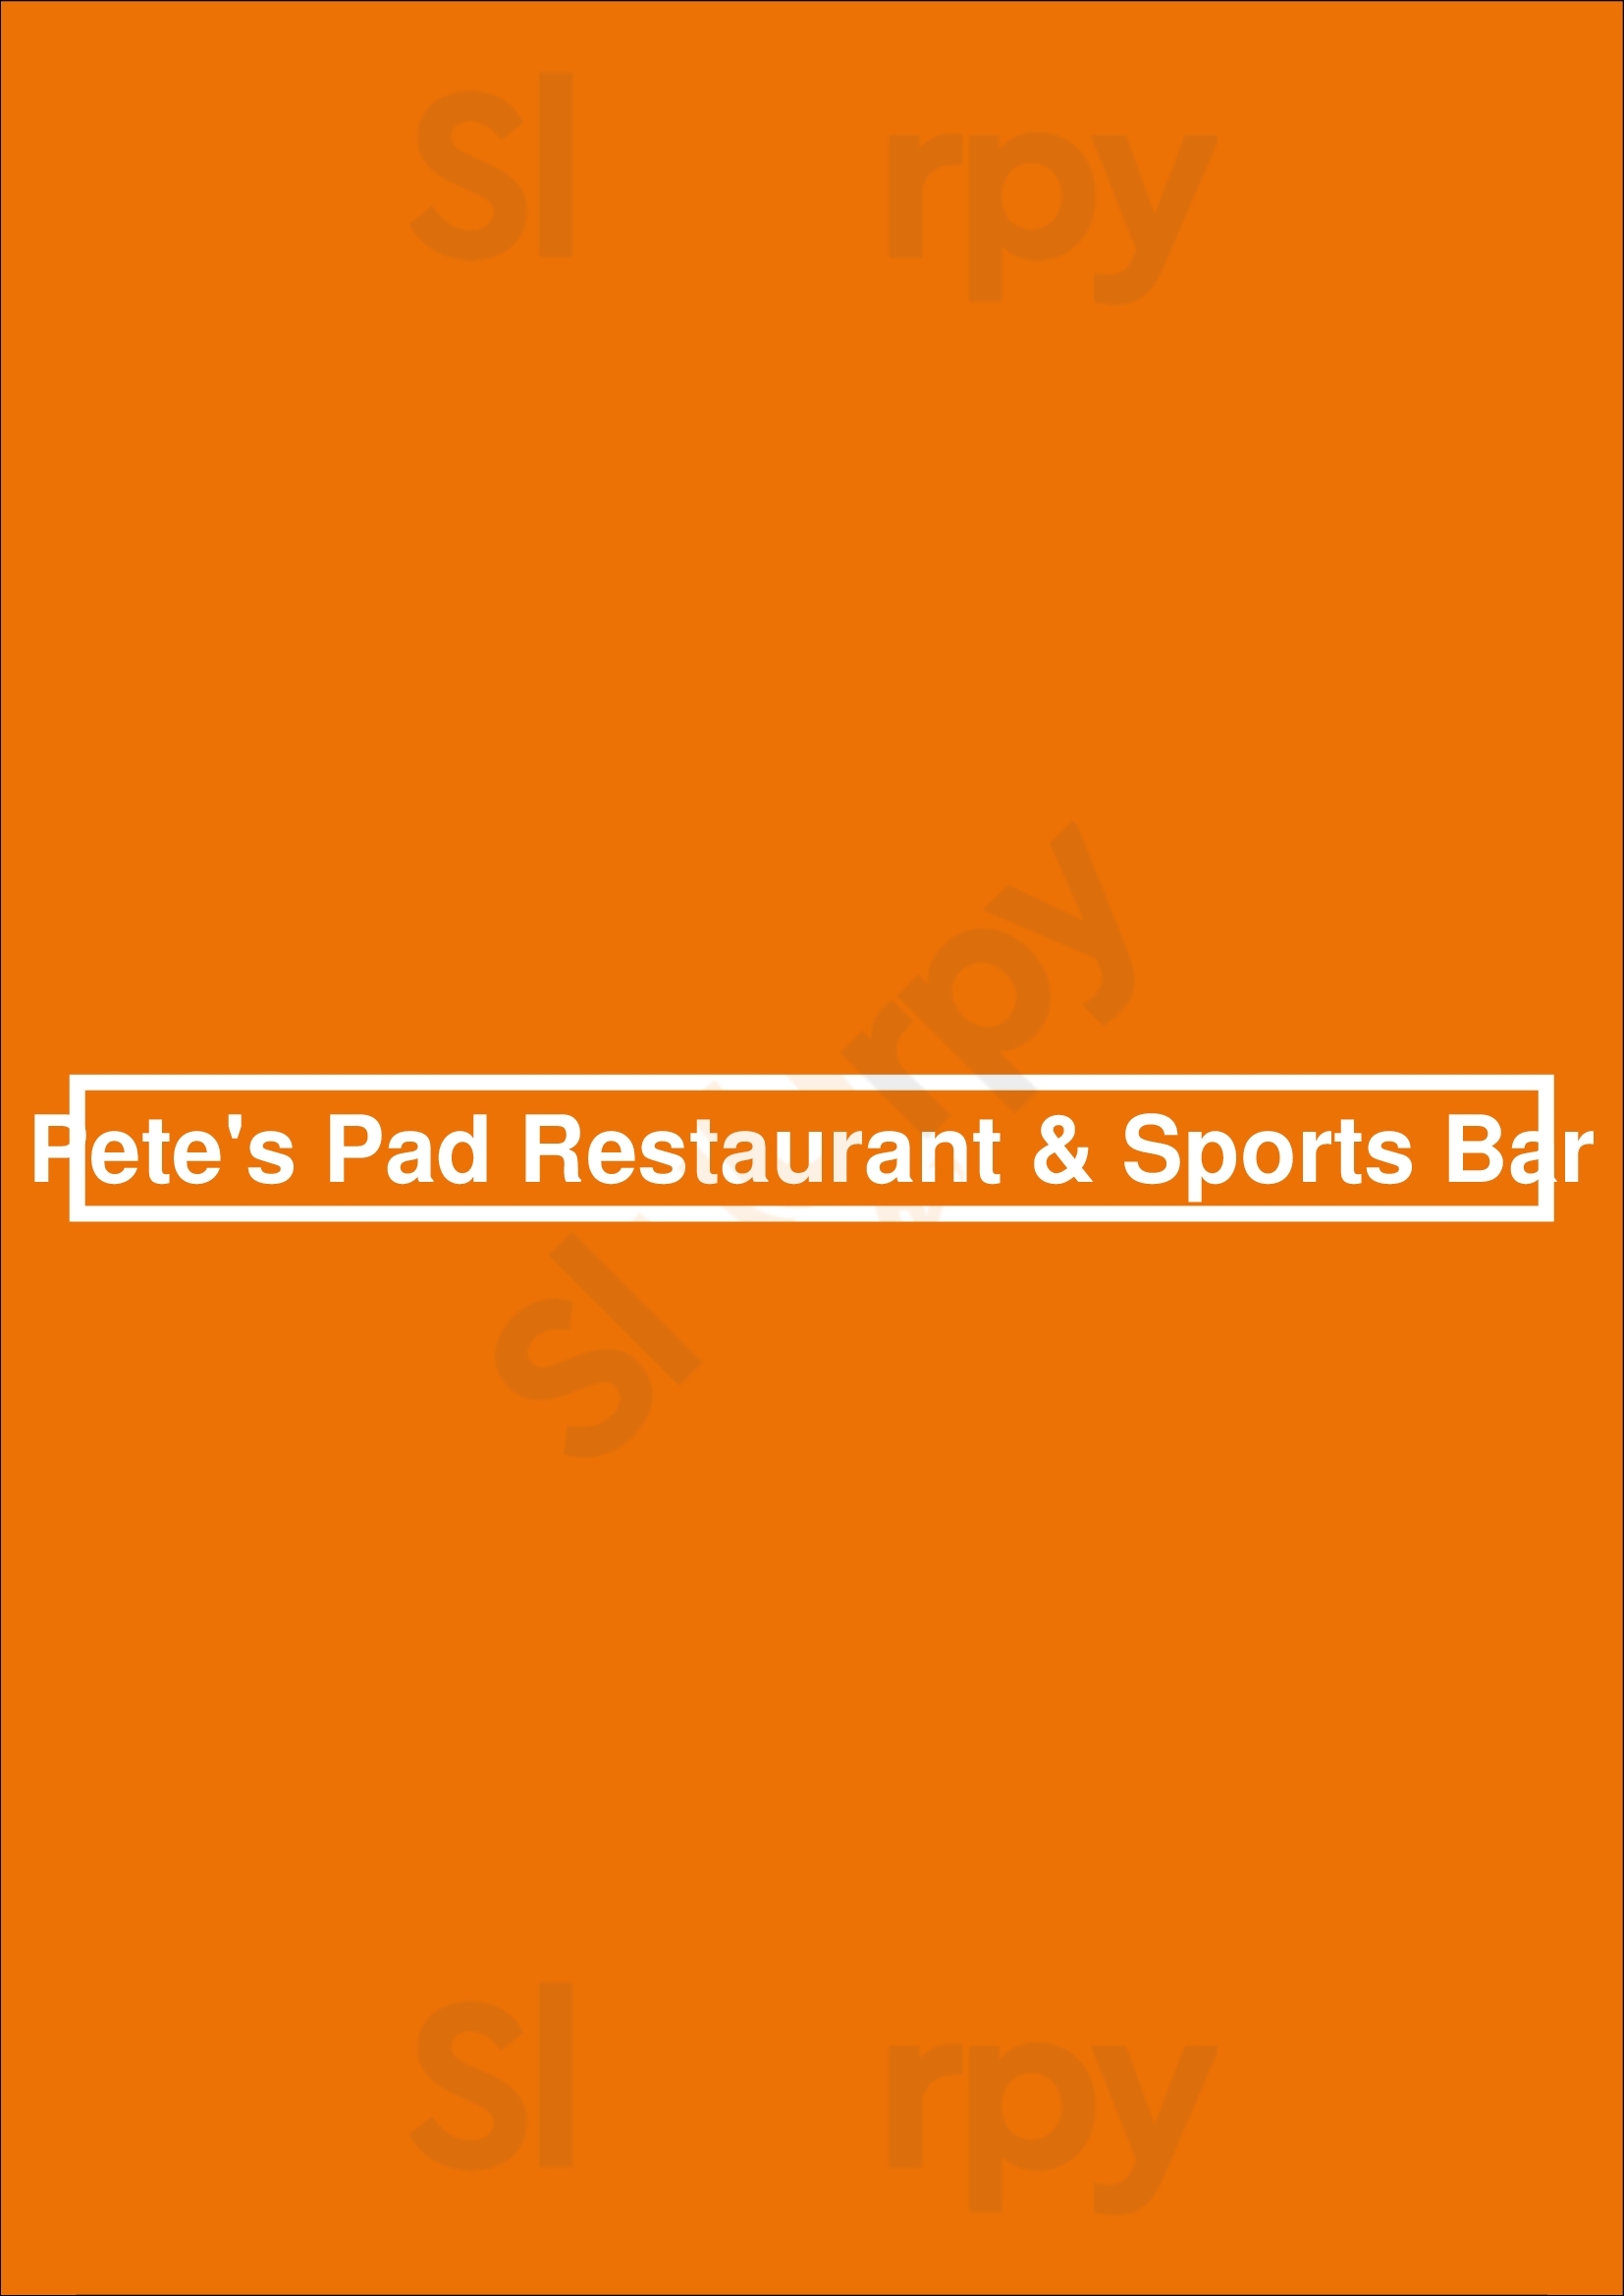 Pete's Pad Restaurant & Sports Bar London Menu - 1